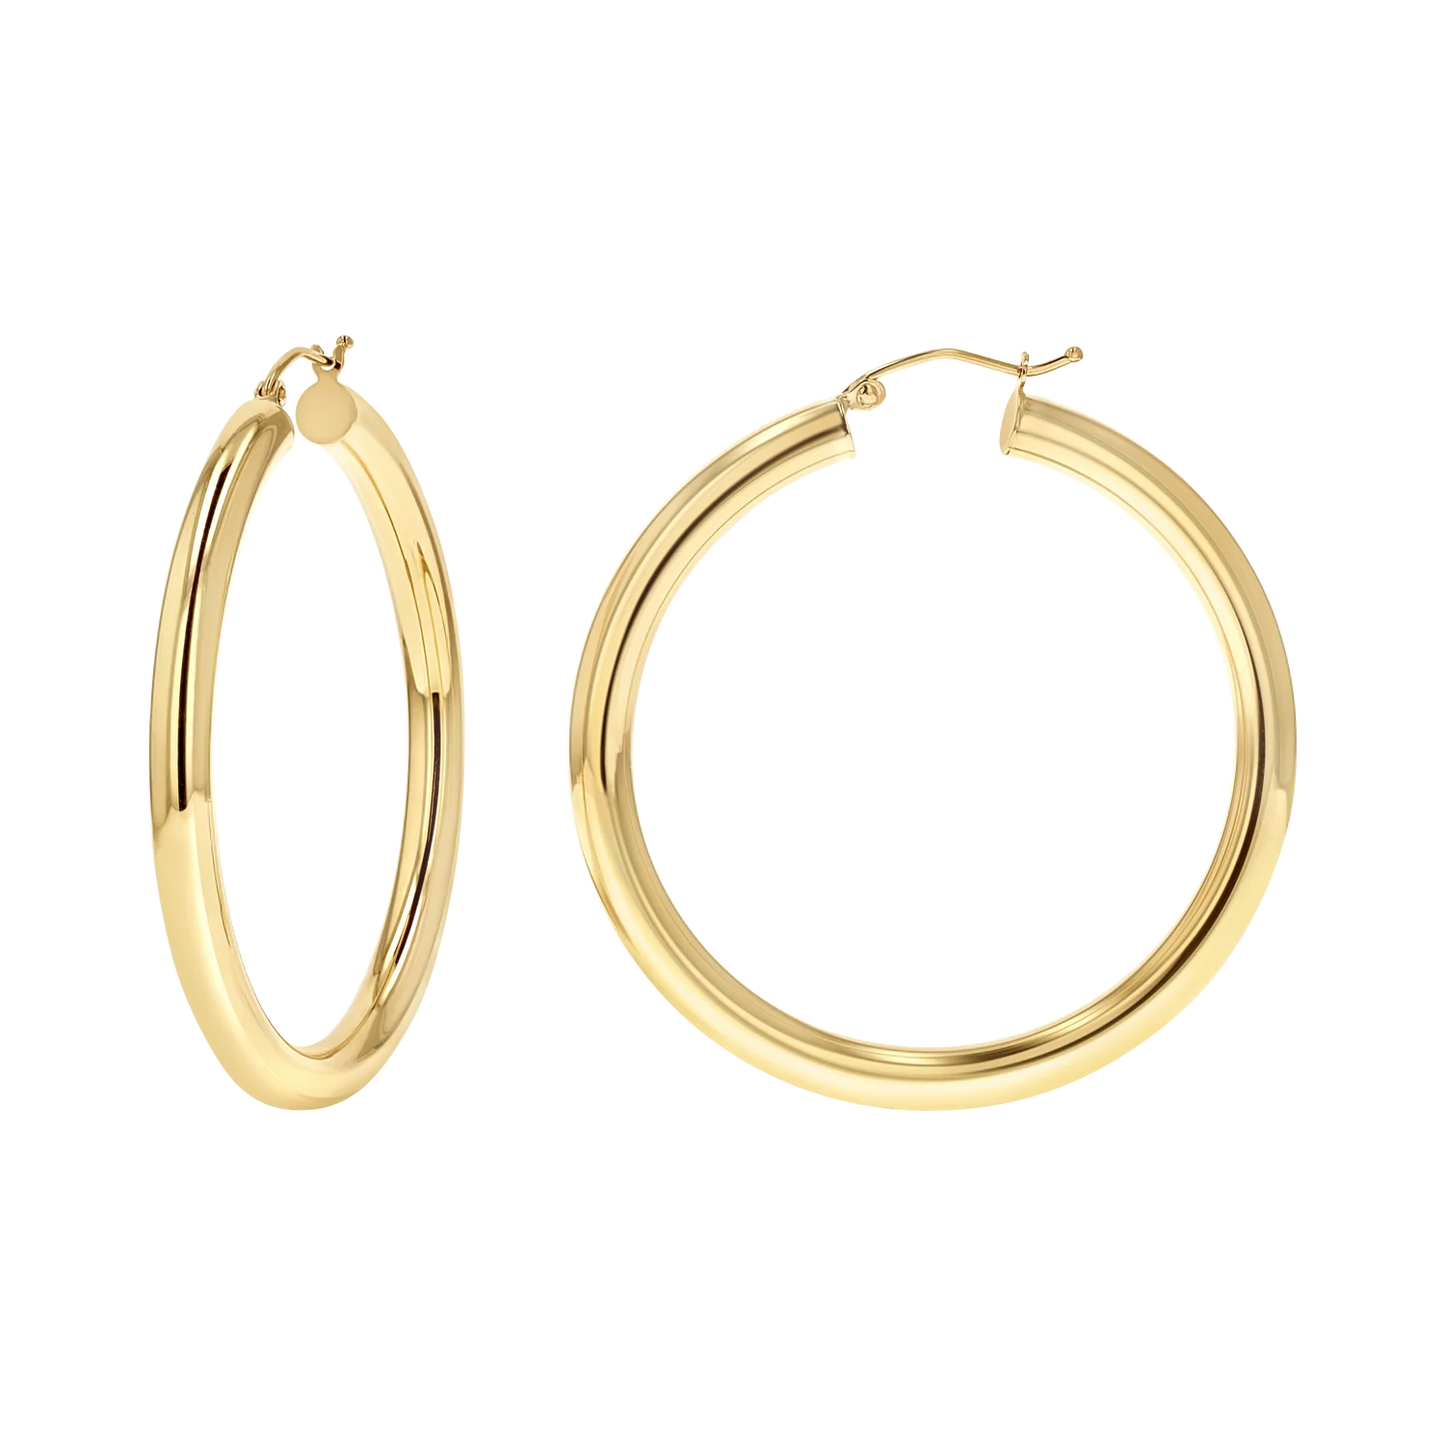 10K Yellow Gold 4mm Tube Hoop Earrings